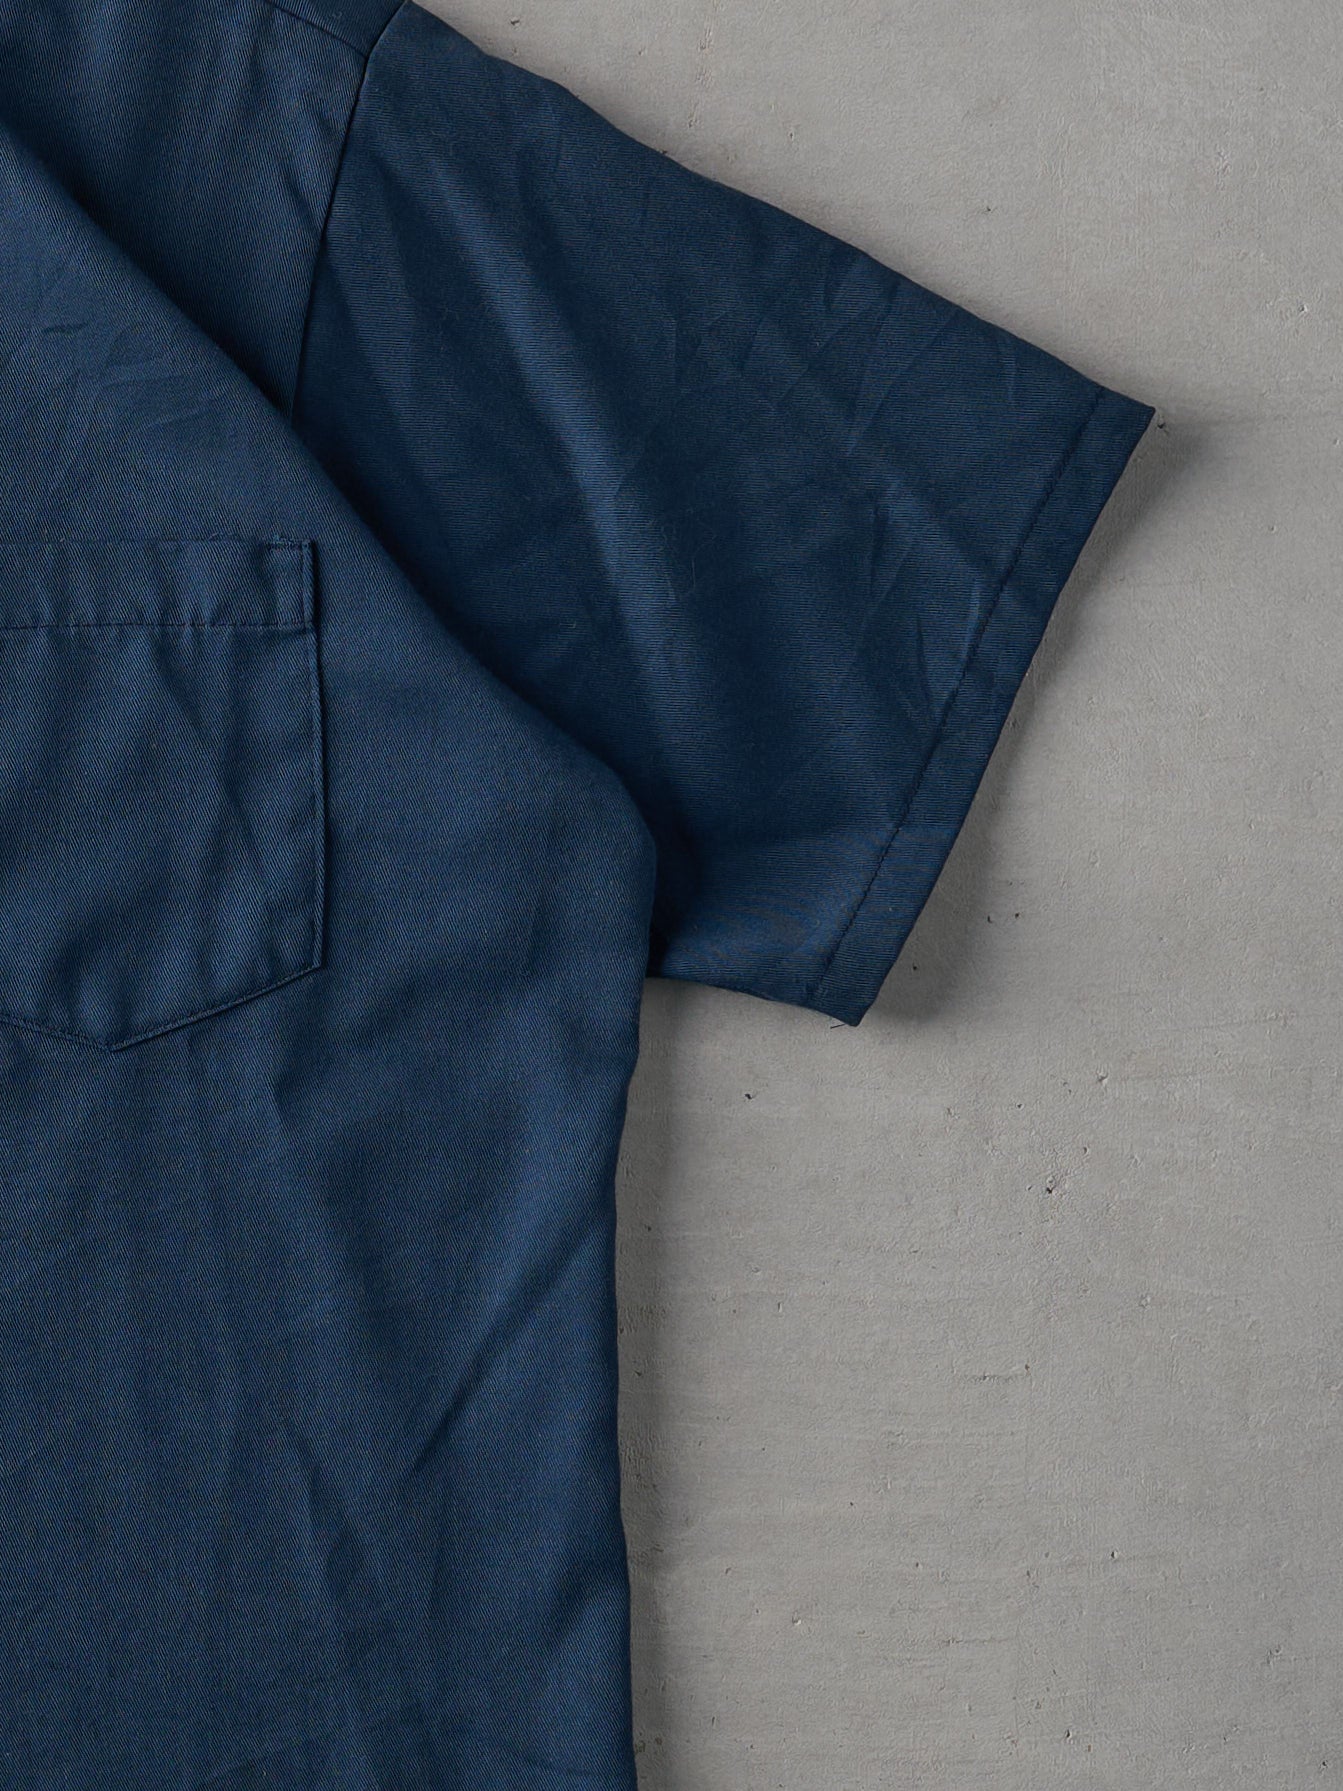 Vintage 70s Navy Blue Big Yank Button Up Shirt (L)